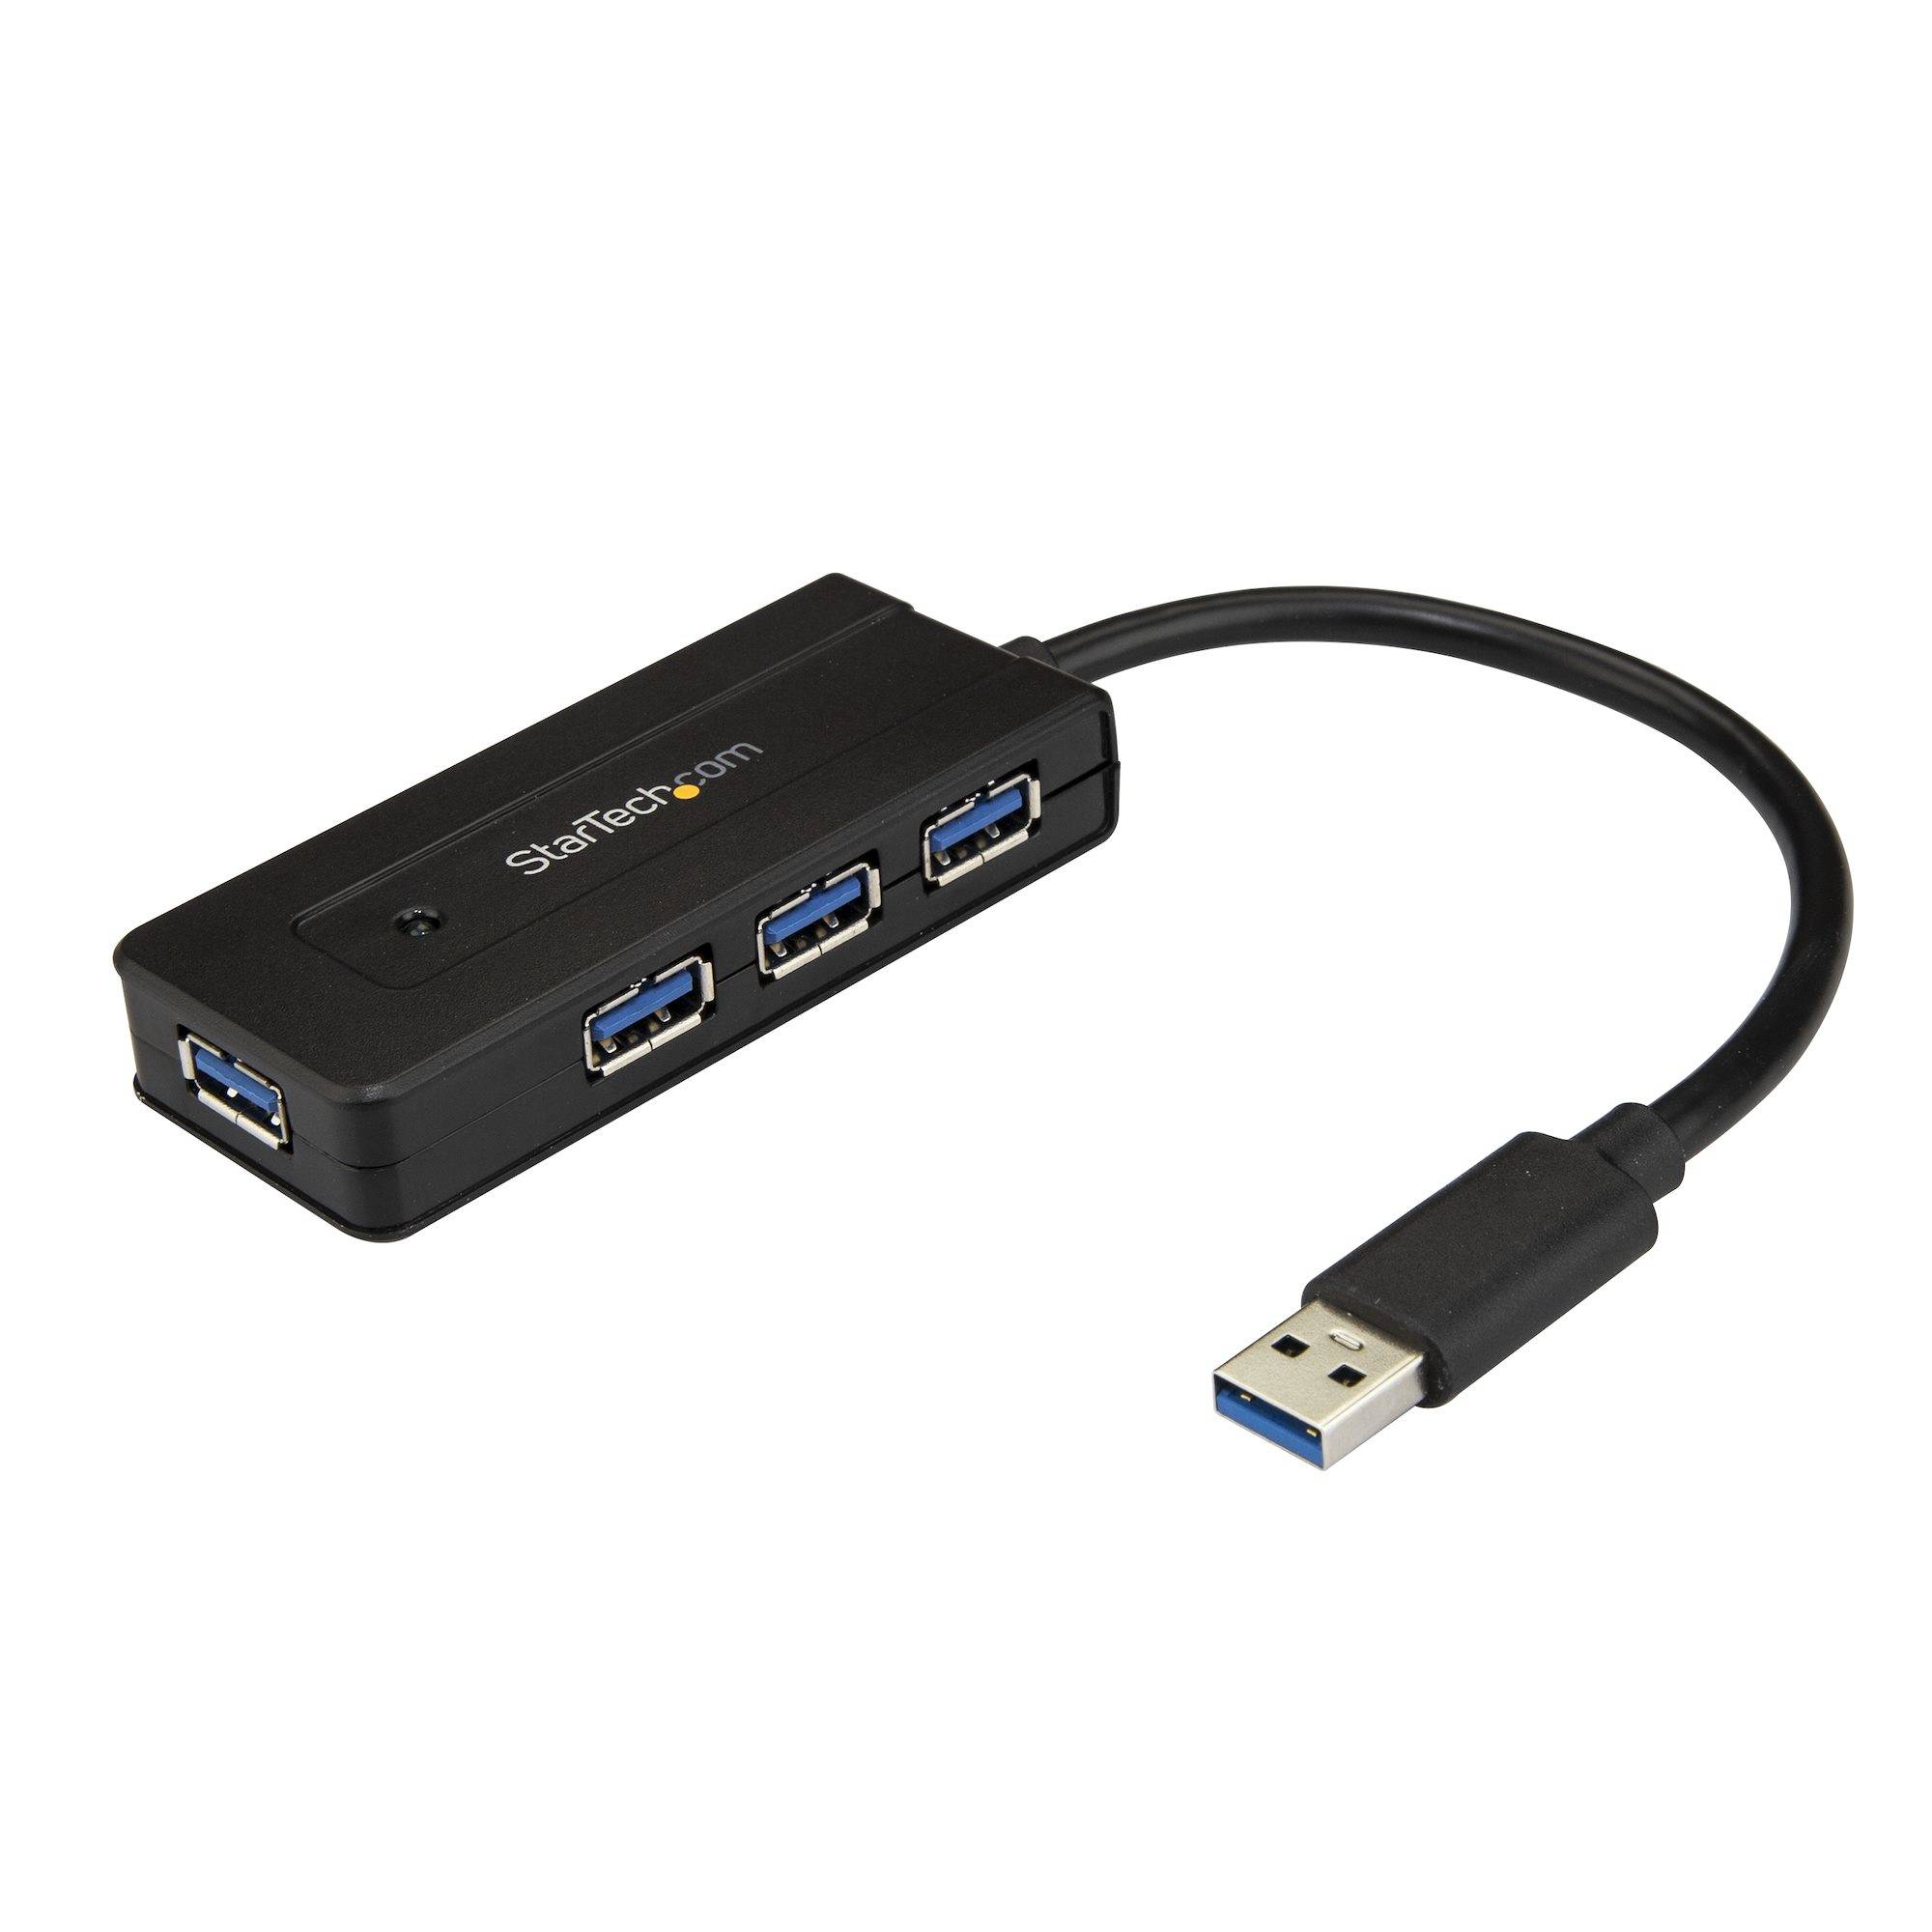 Rca Informatique - Image du produit : 4PORT USB 3.0 HUB WITH CHARGE PORT - POWERED USB 3.0 HUB